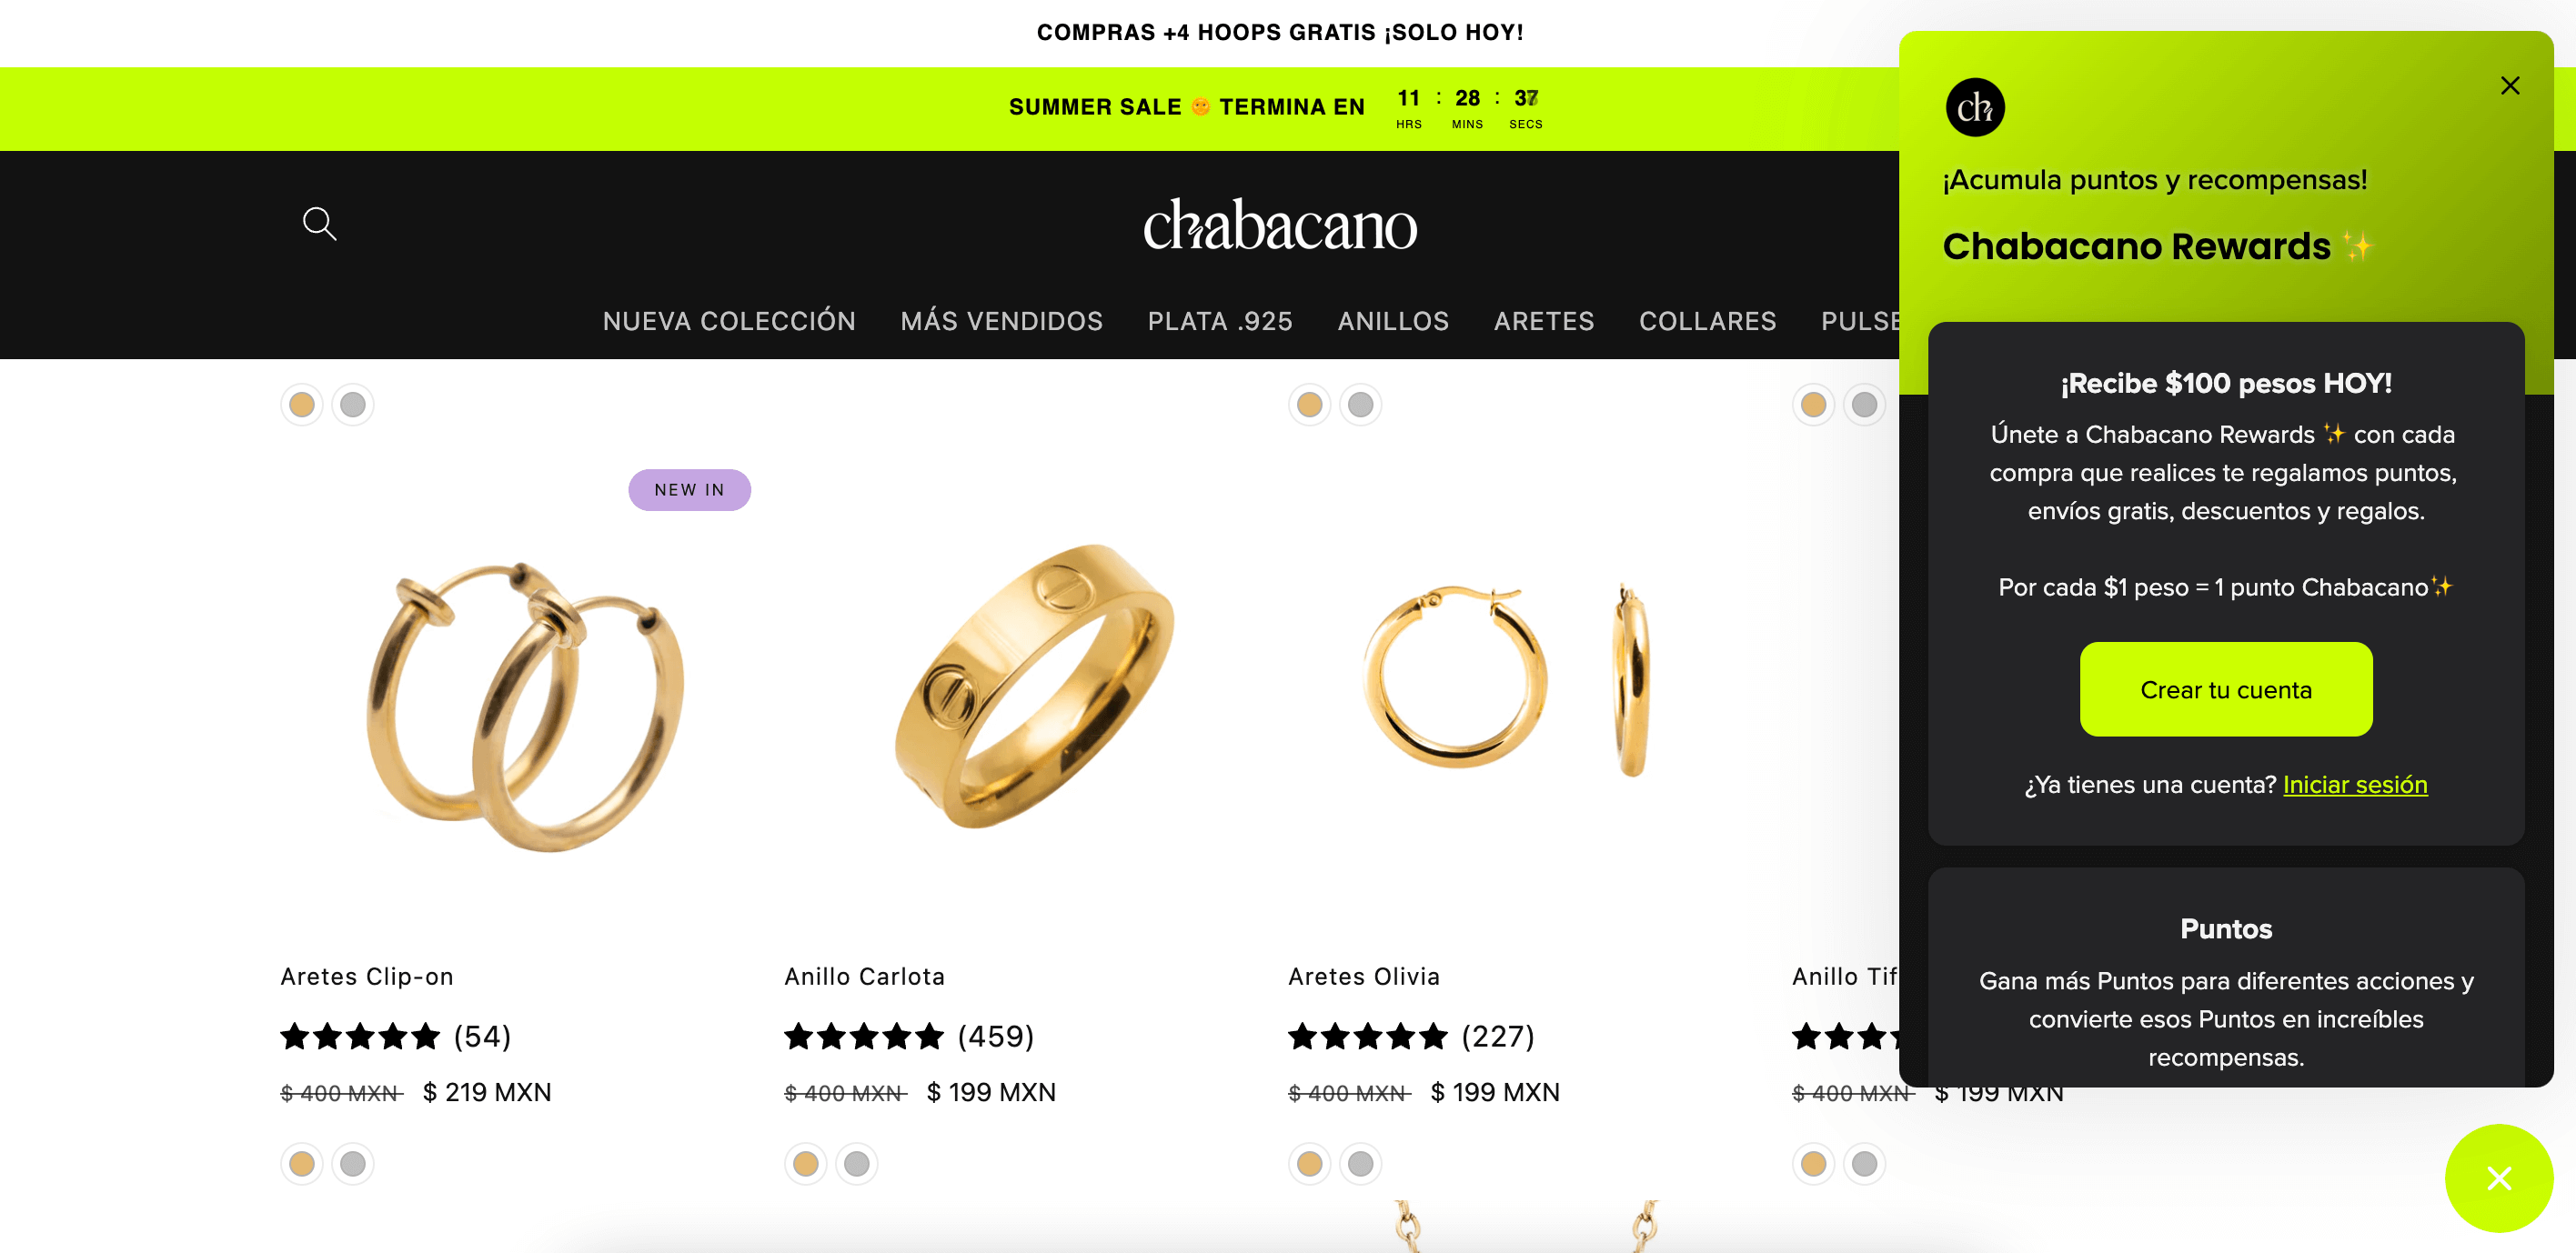 screenshot of ecommerce jewelry brand Chabacano and its loyalty program launcher